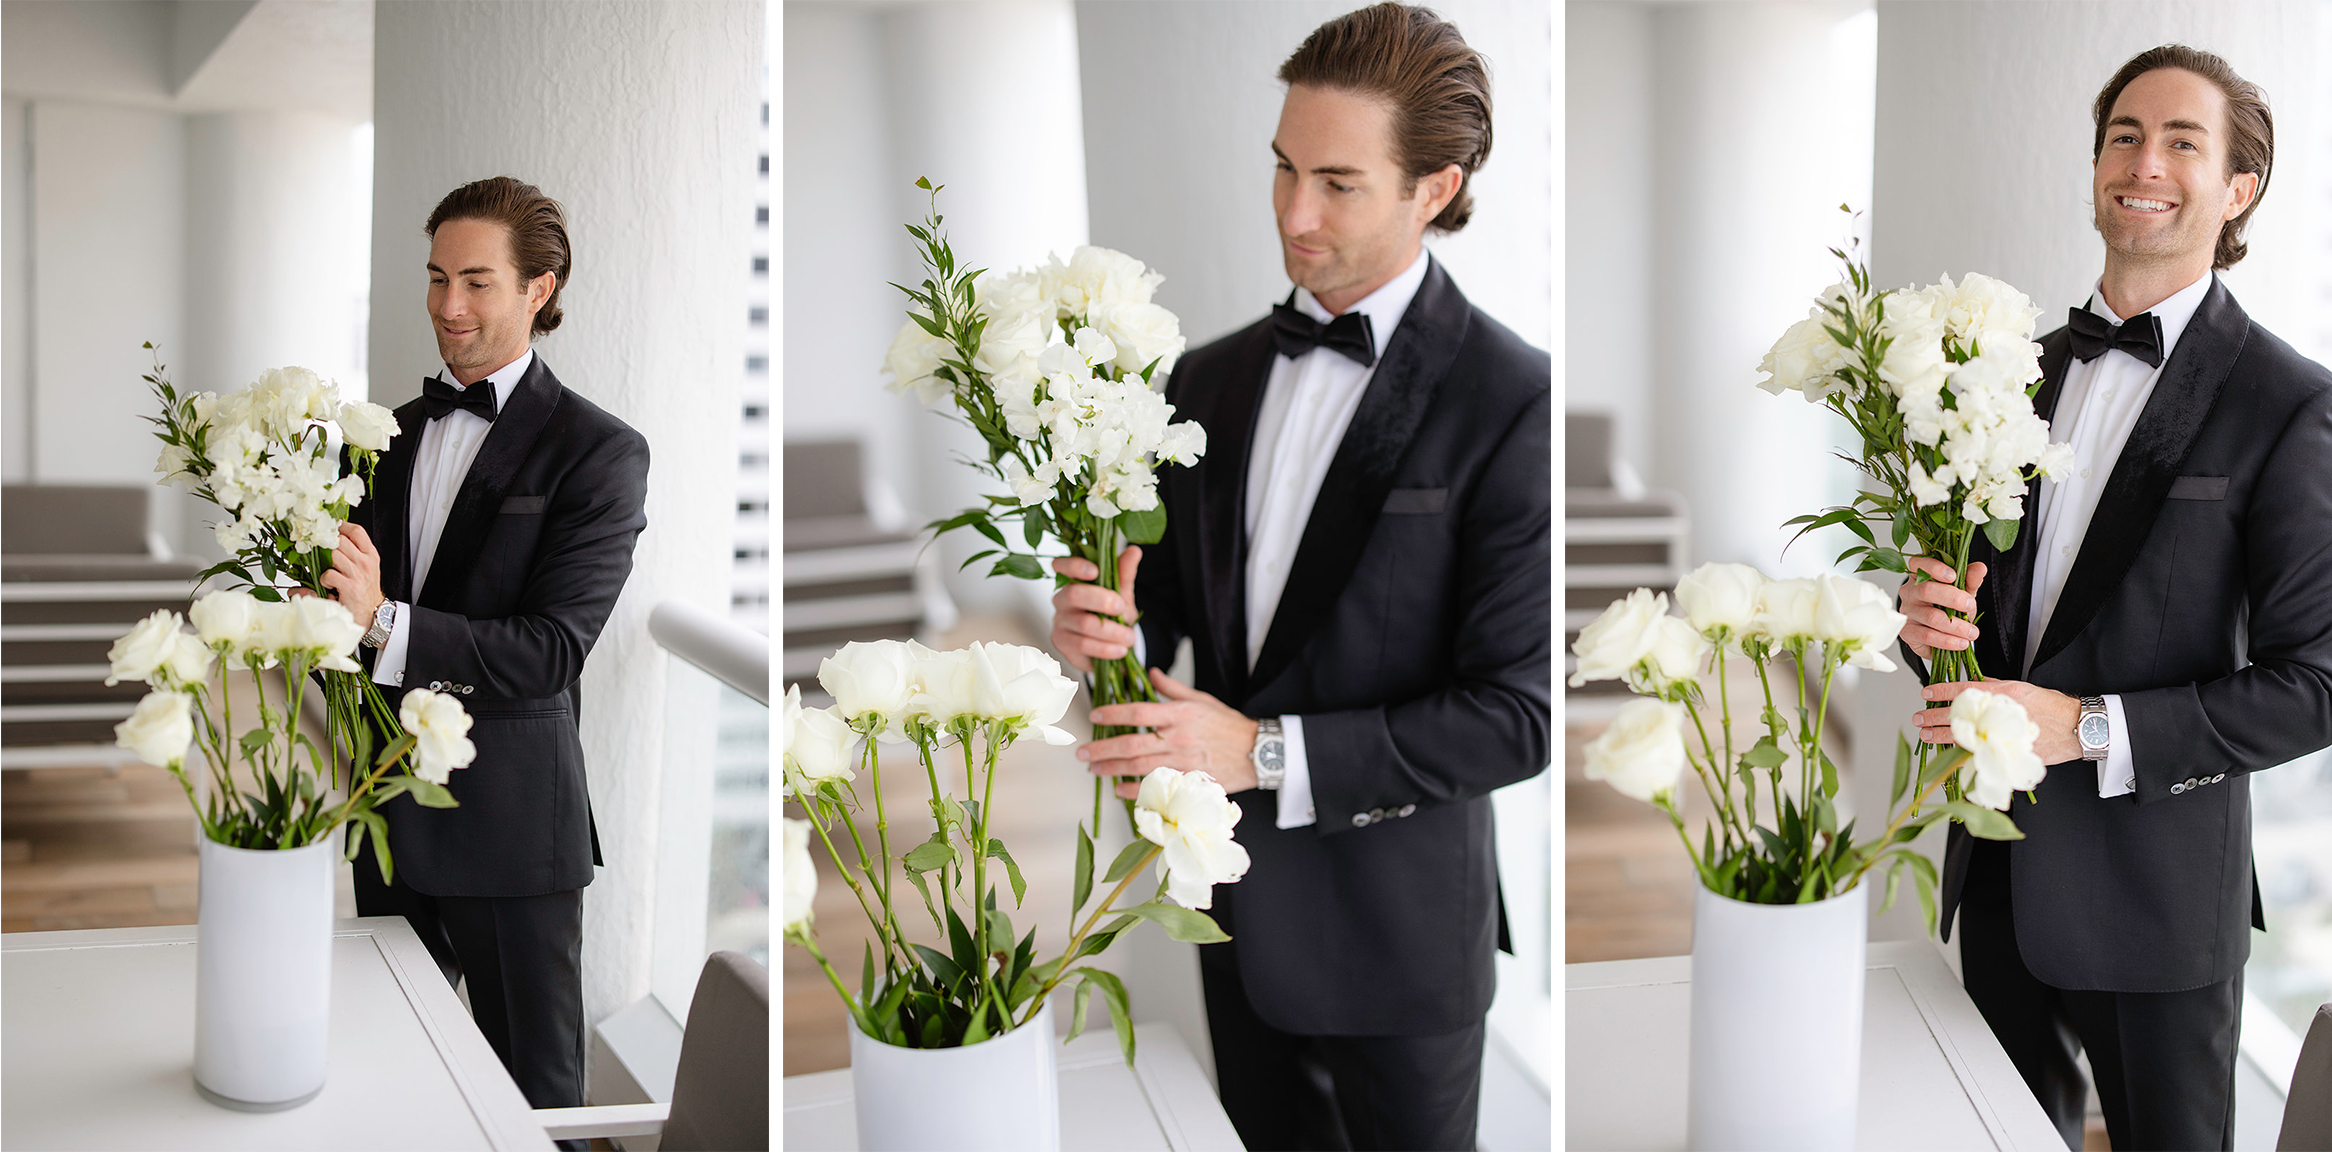 wedding details: Shane surprised his bride, Emma, by handcrafting her bridal bouquet himself.